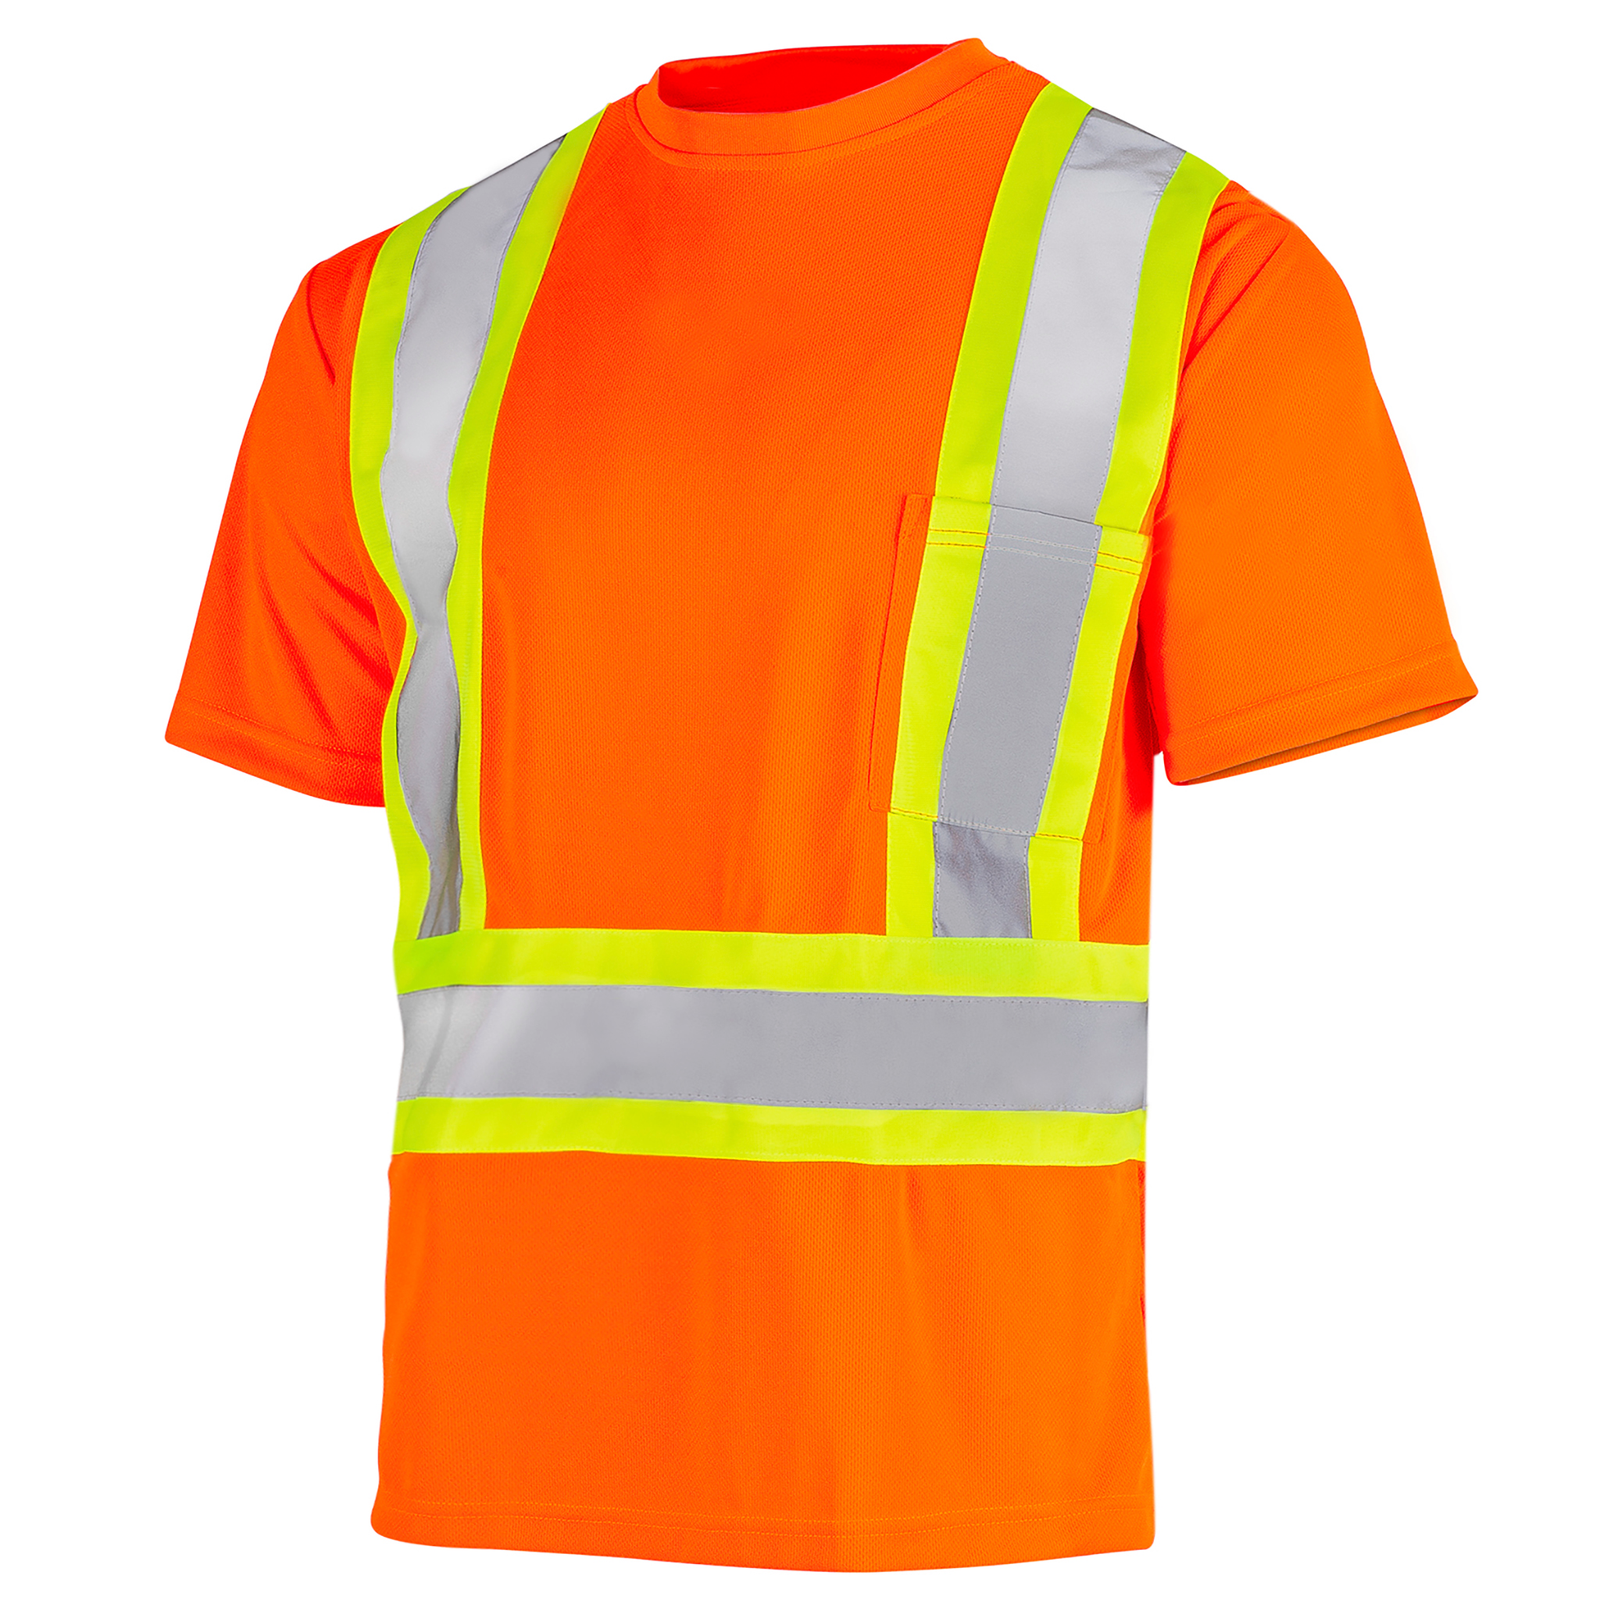 Diagonal view of a Hi-vis reflective two tone safety orange yellow pocket shirt 